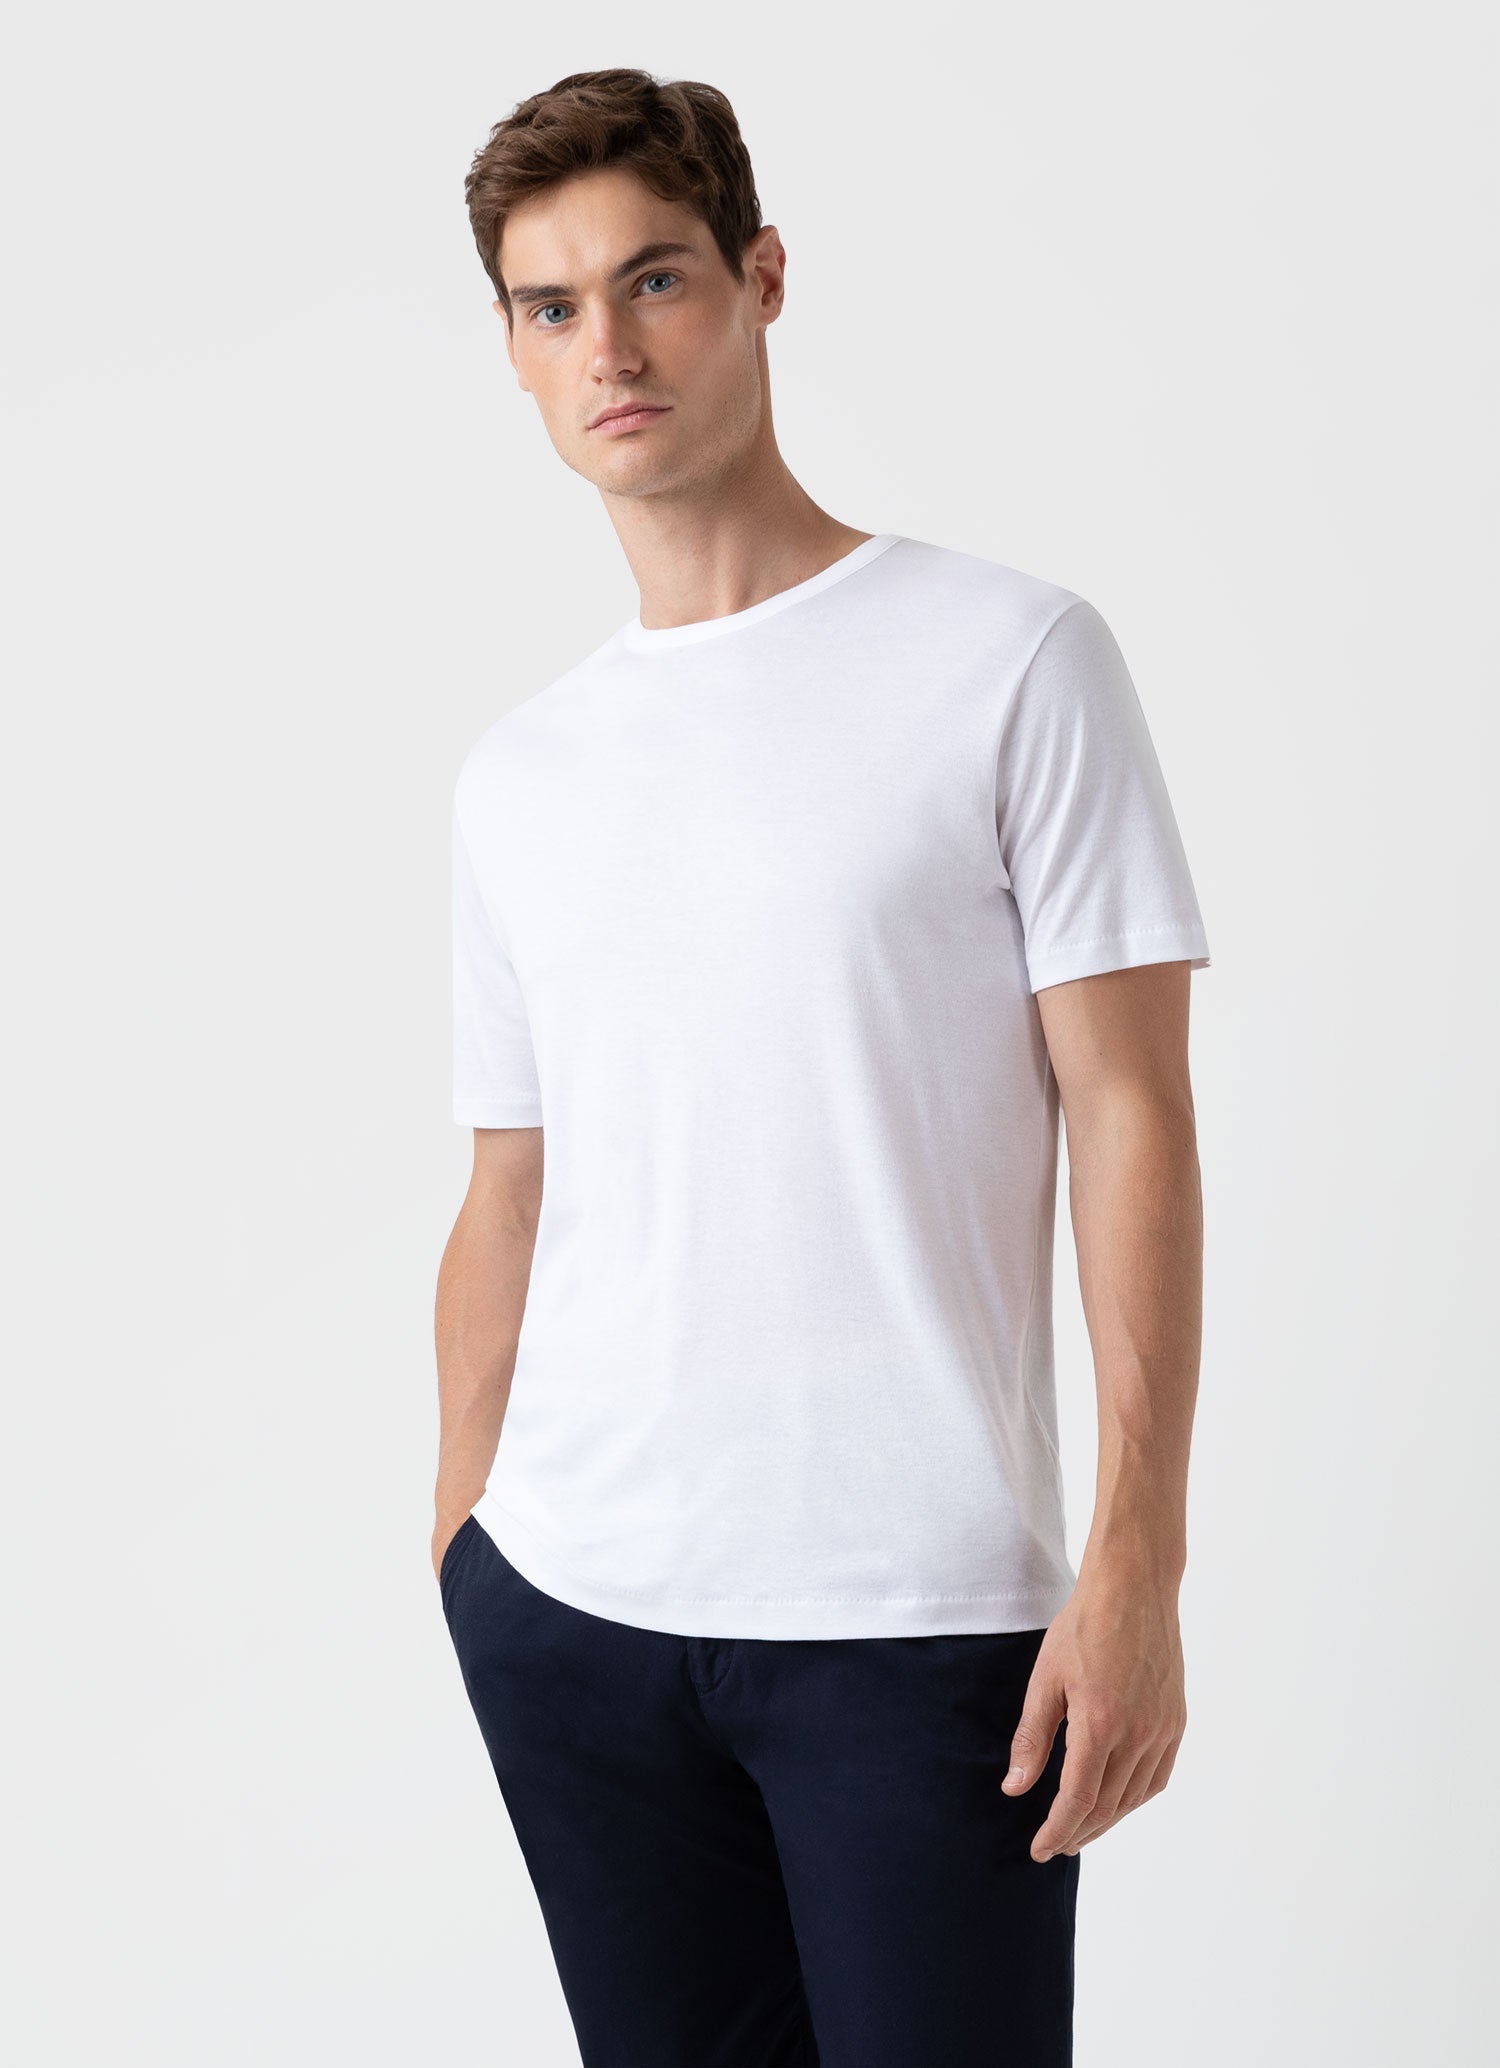 White Longline Cold Shoulder T-Shirt - Matalan